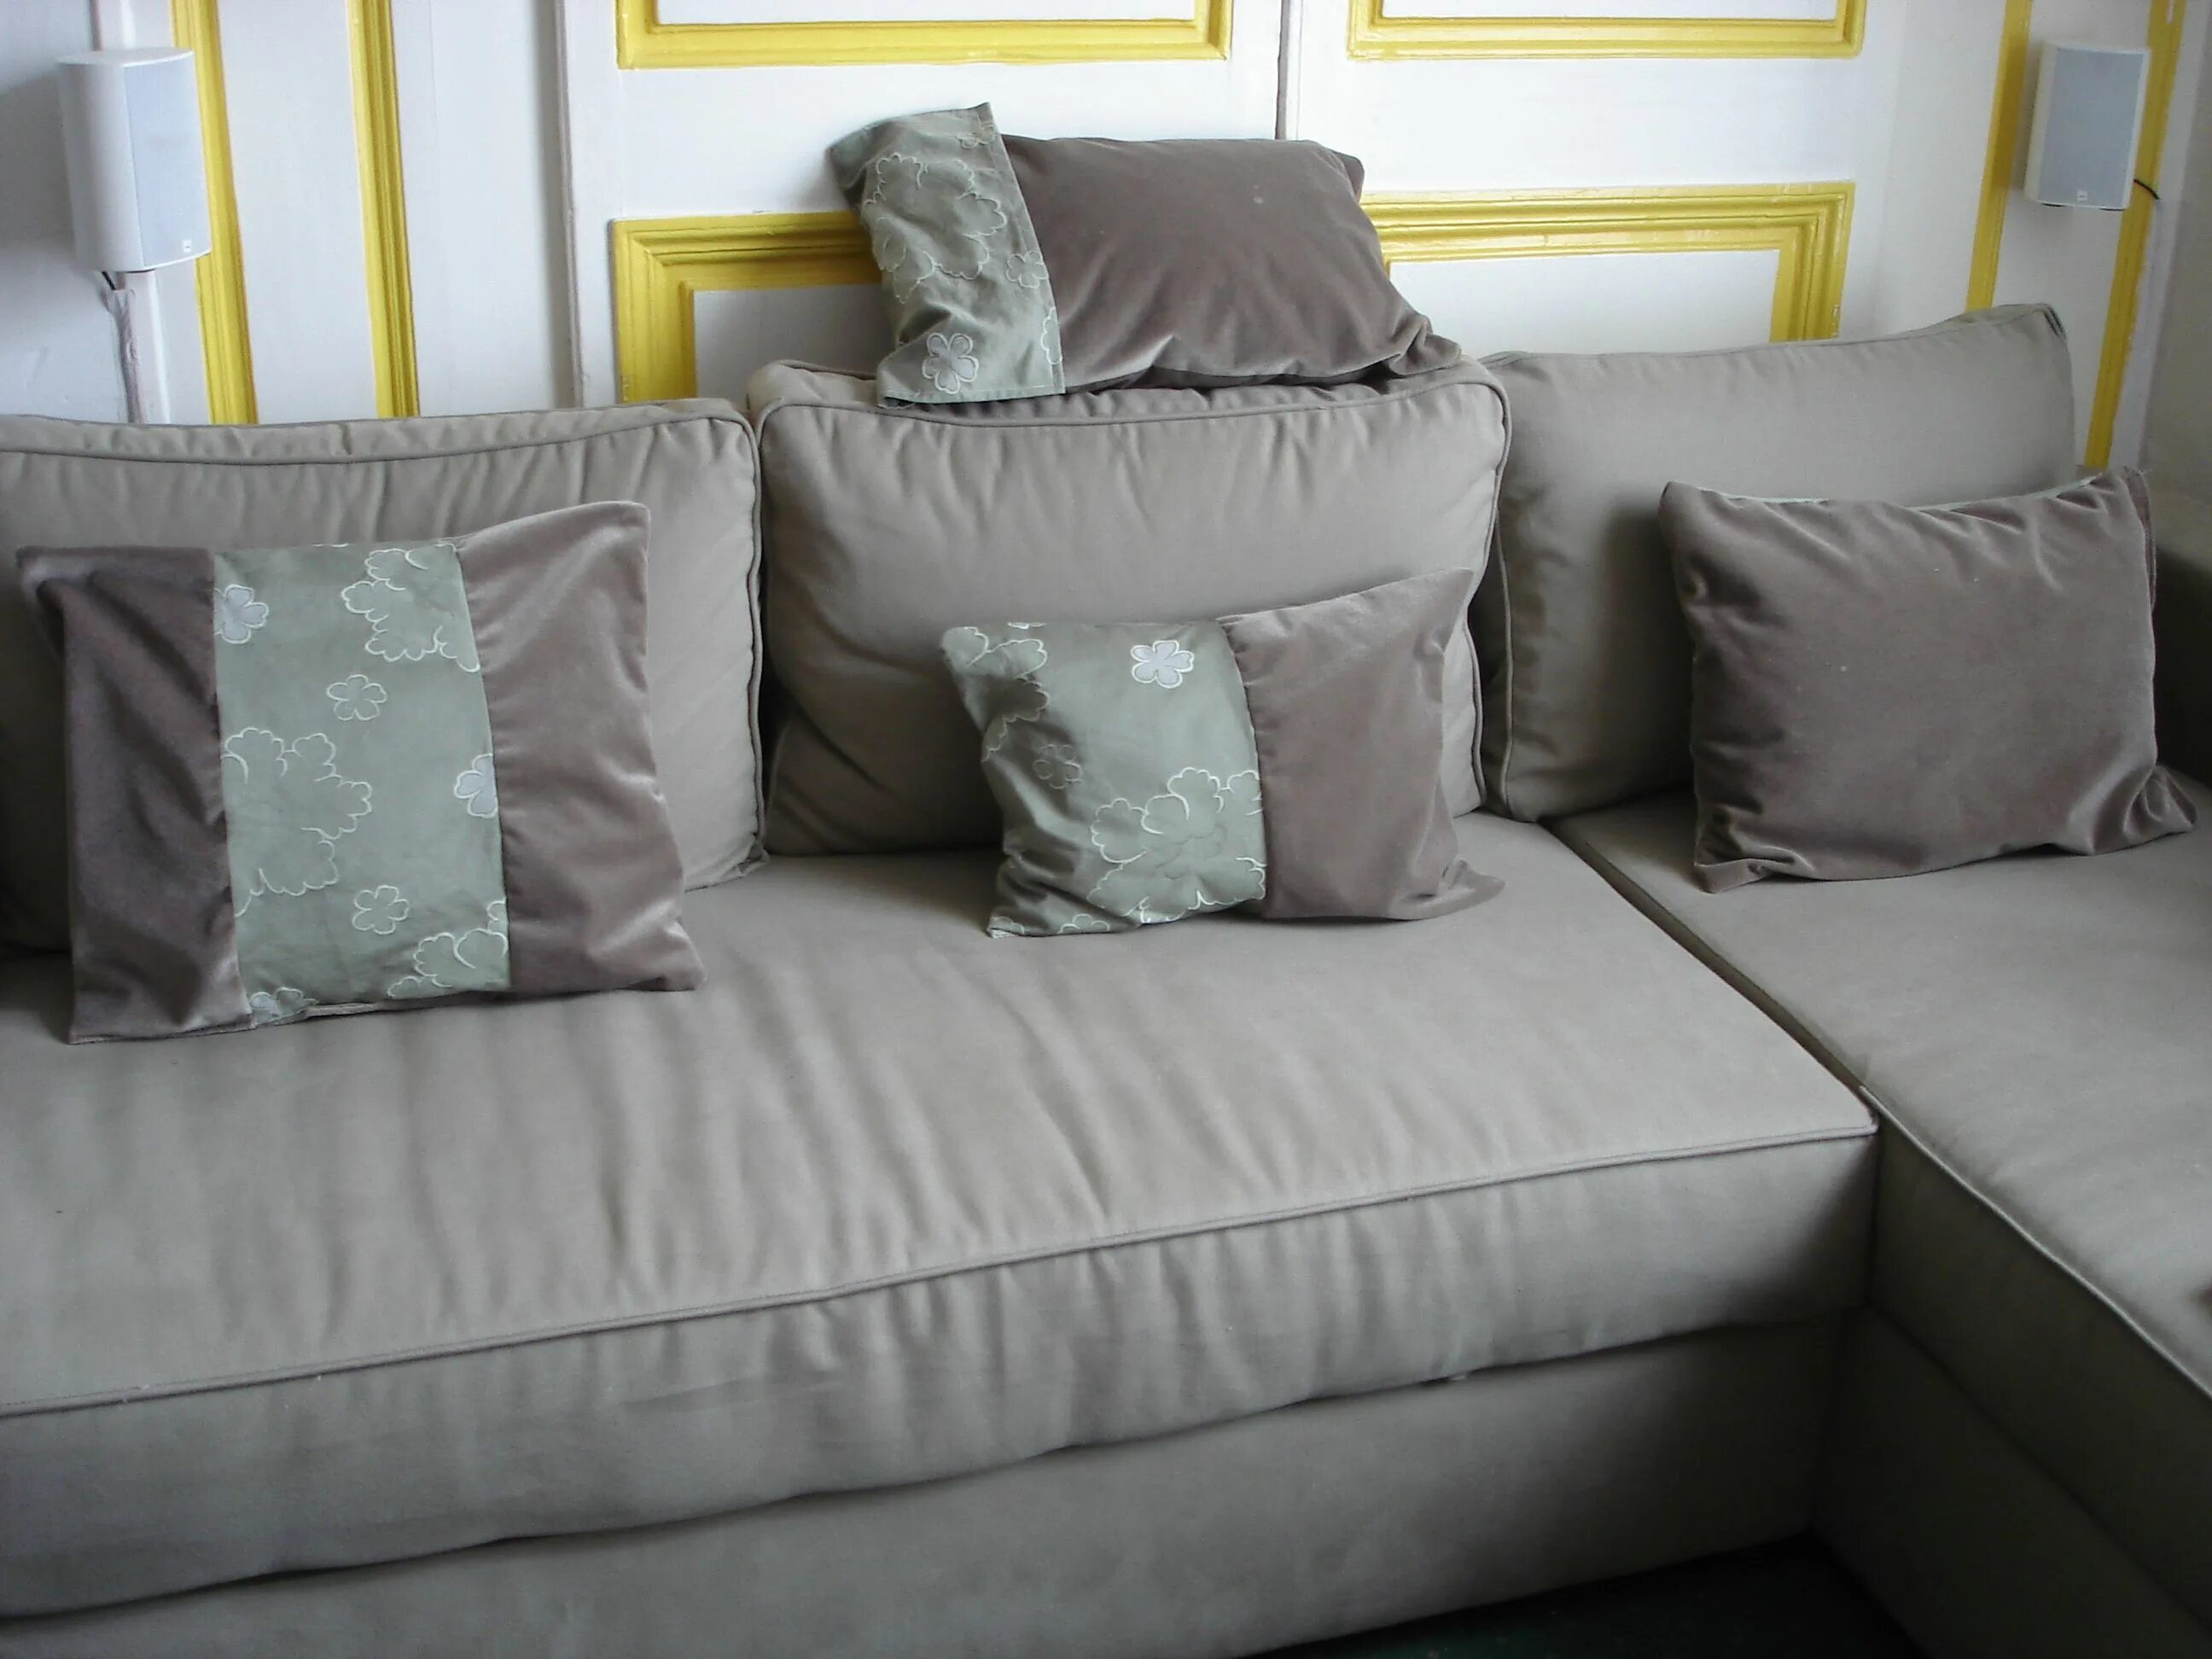 Фото дивана с подушками. Подушка для дивана. Серый диван с подушками. Диван с мягкими подушками. Подушки на сером диване в интерьере.